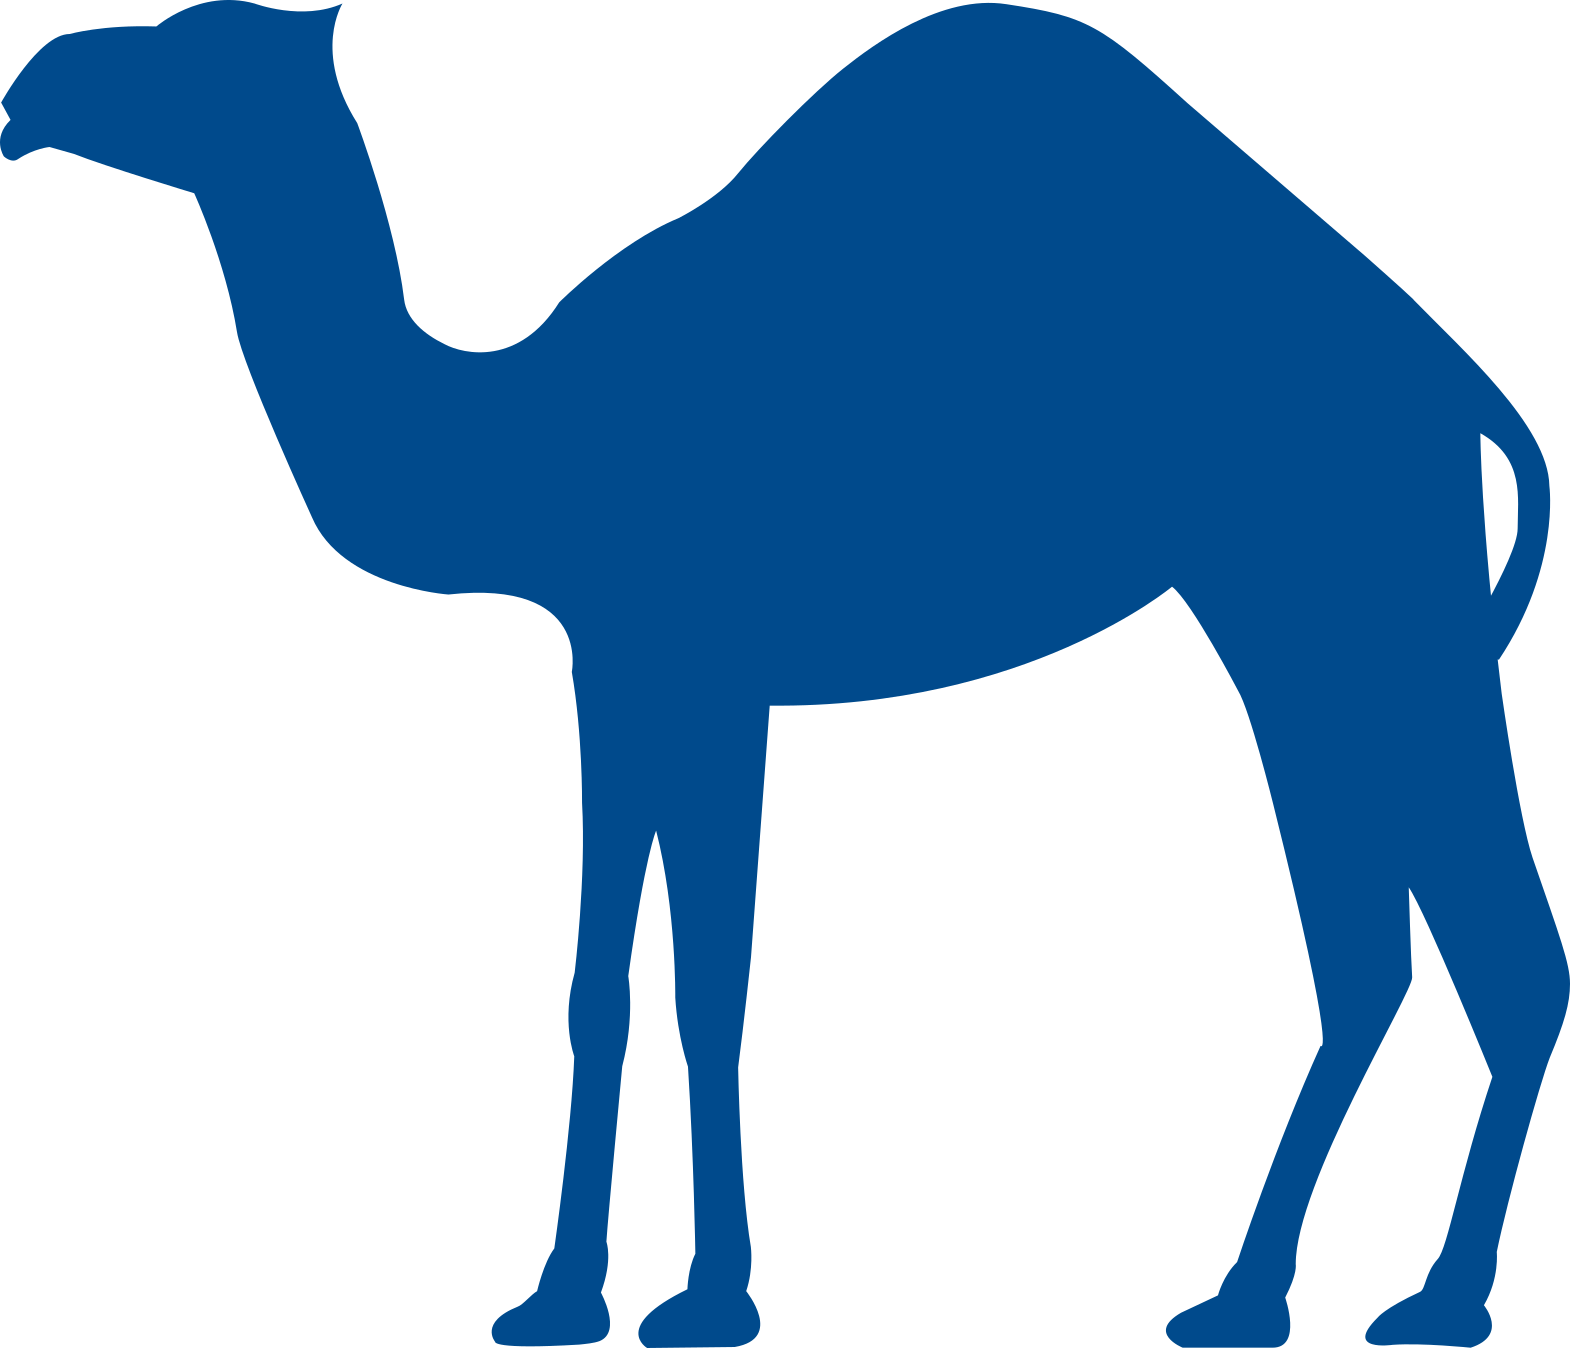 National Bank of Kuwait logo (PNG transparent)